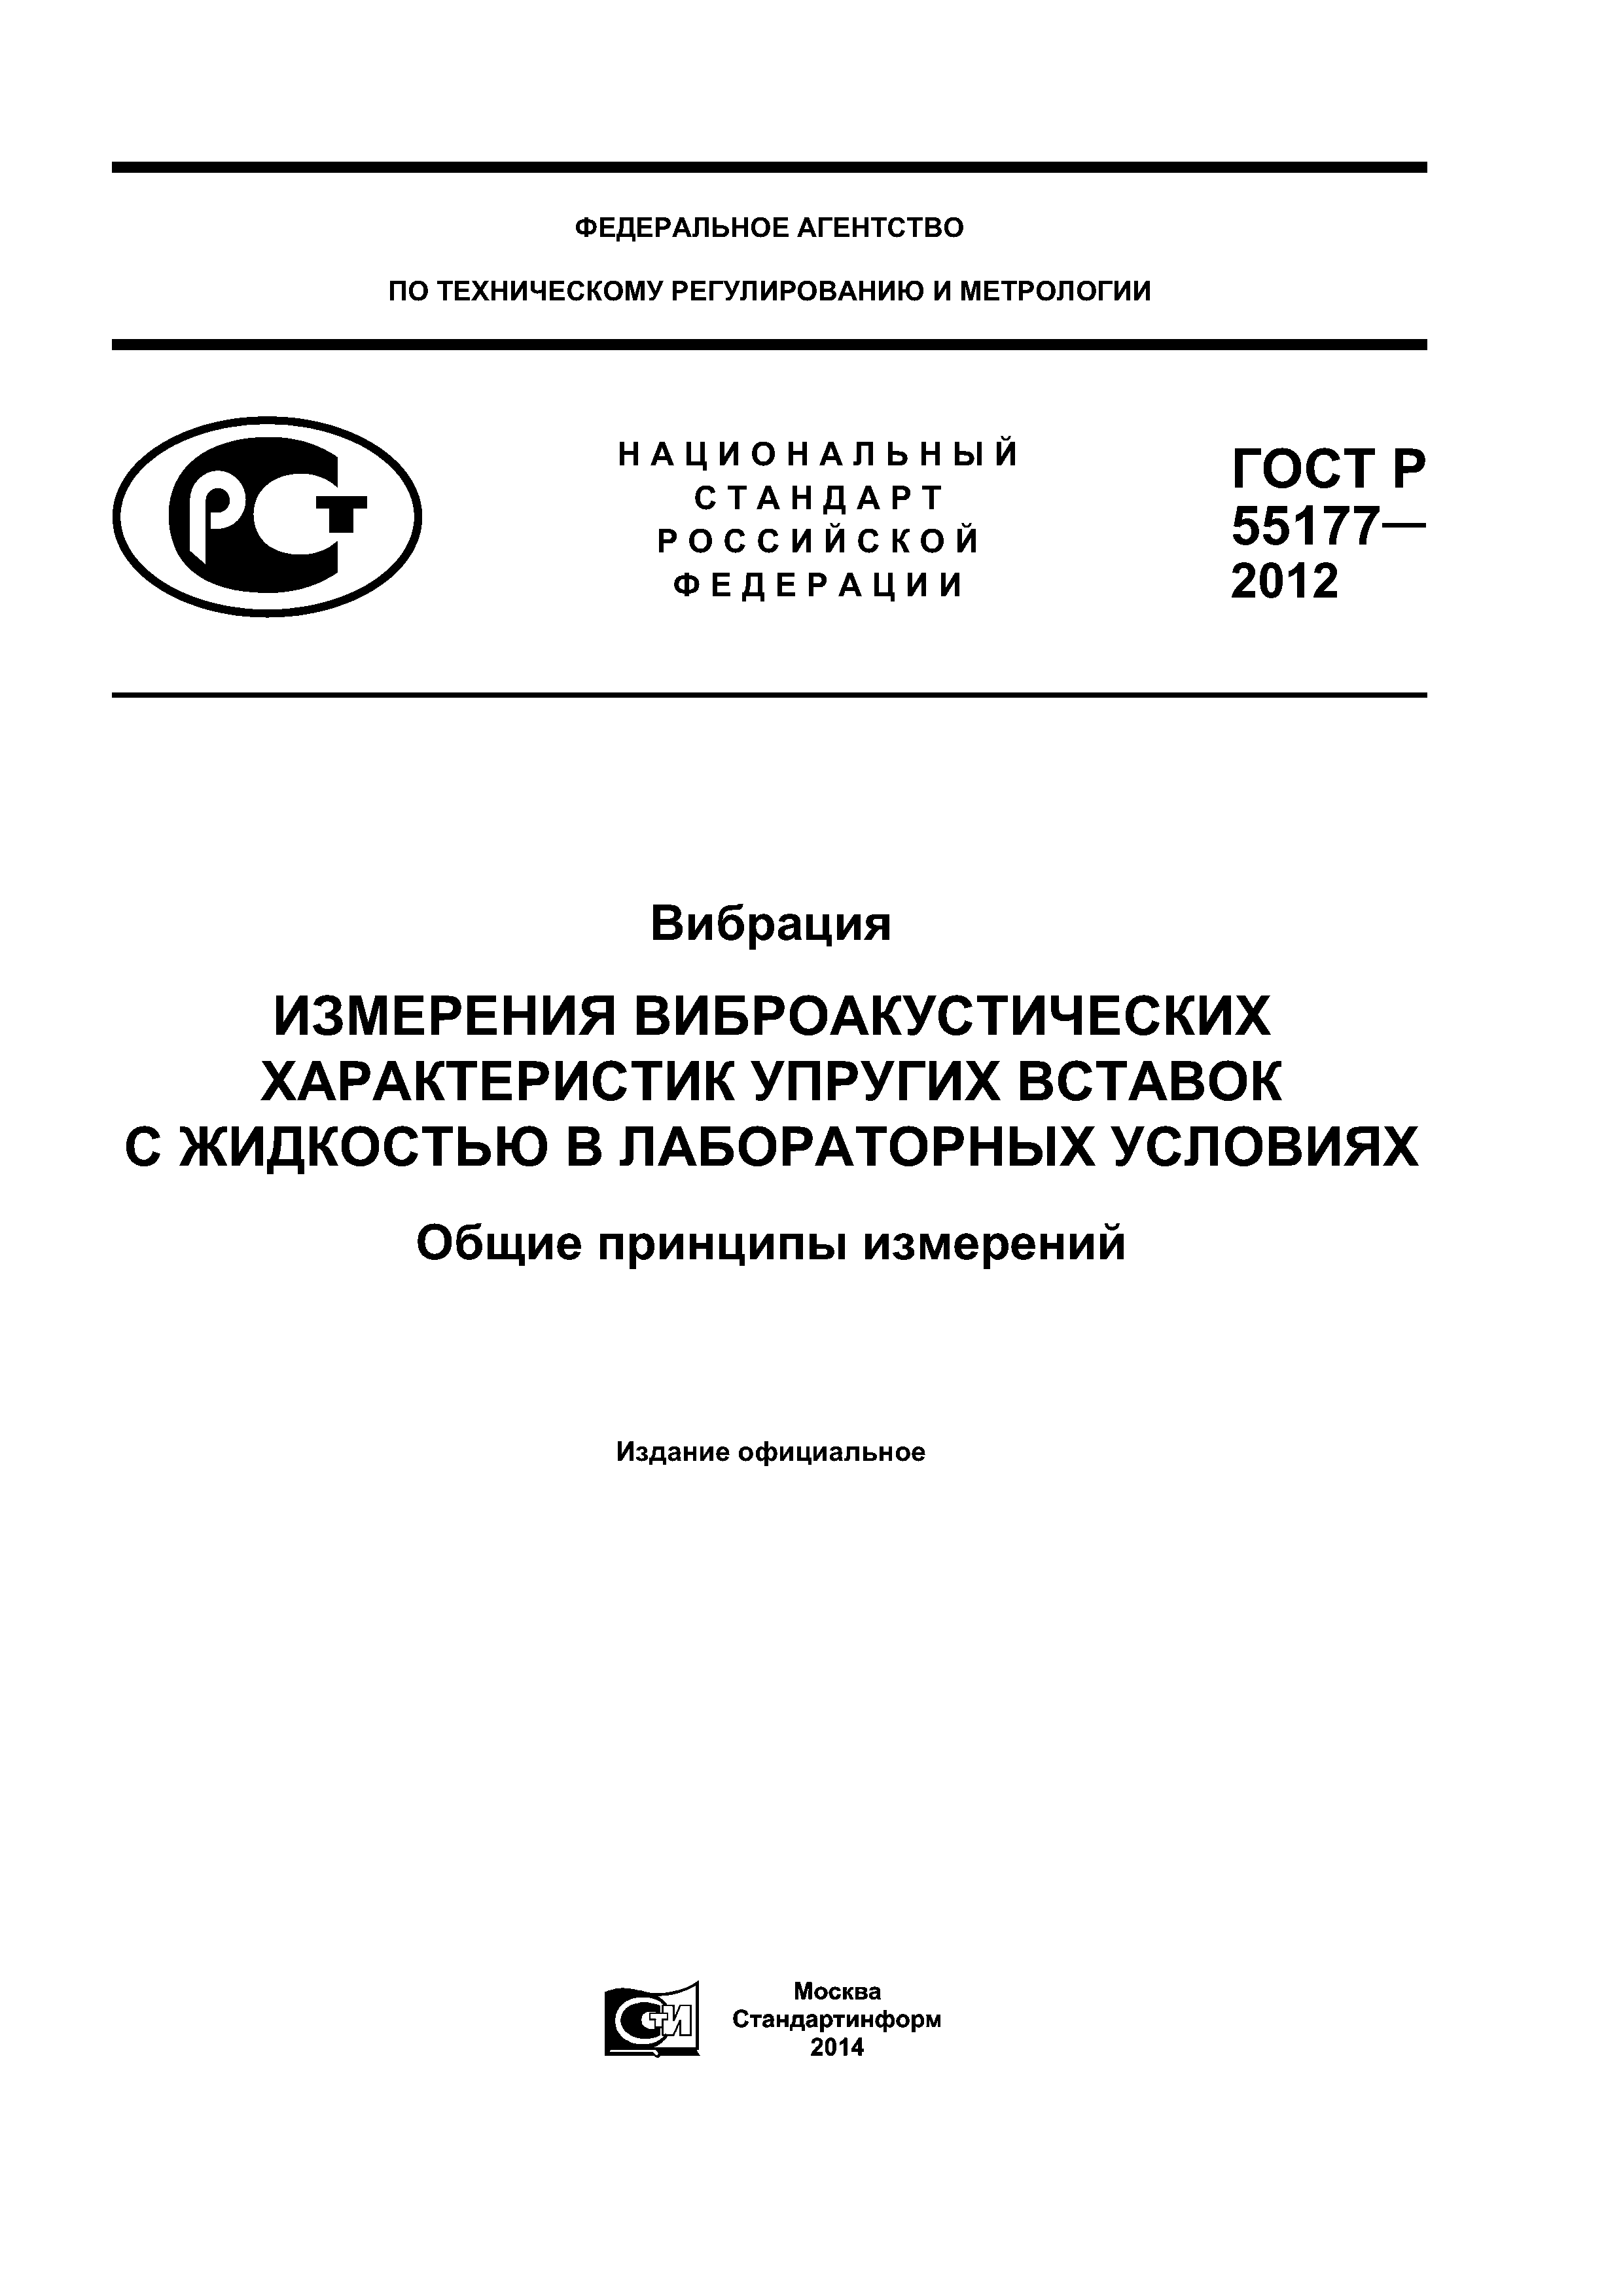 ГОСТ Р 55177-2012